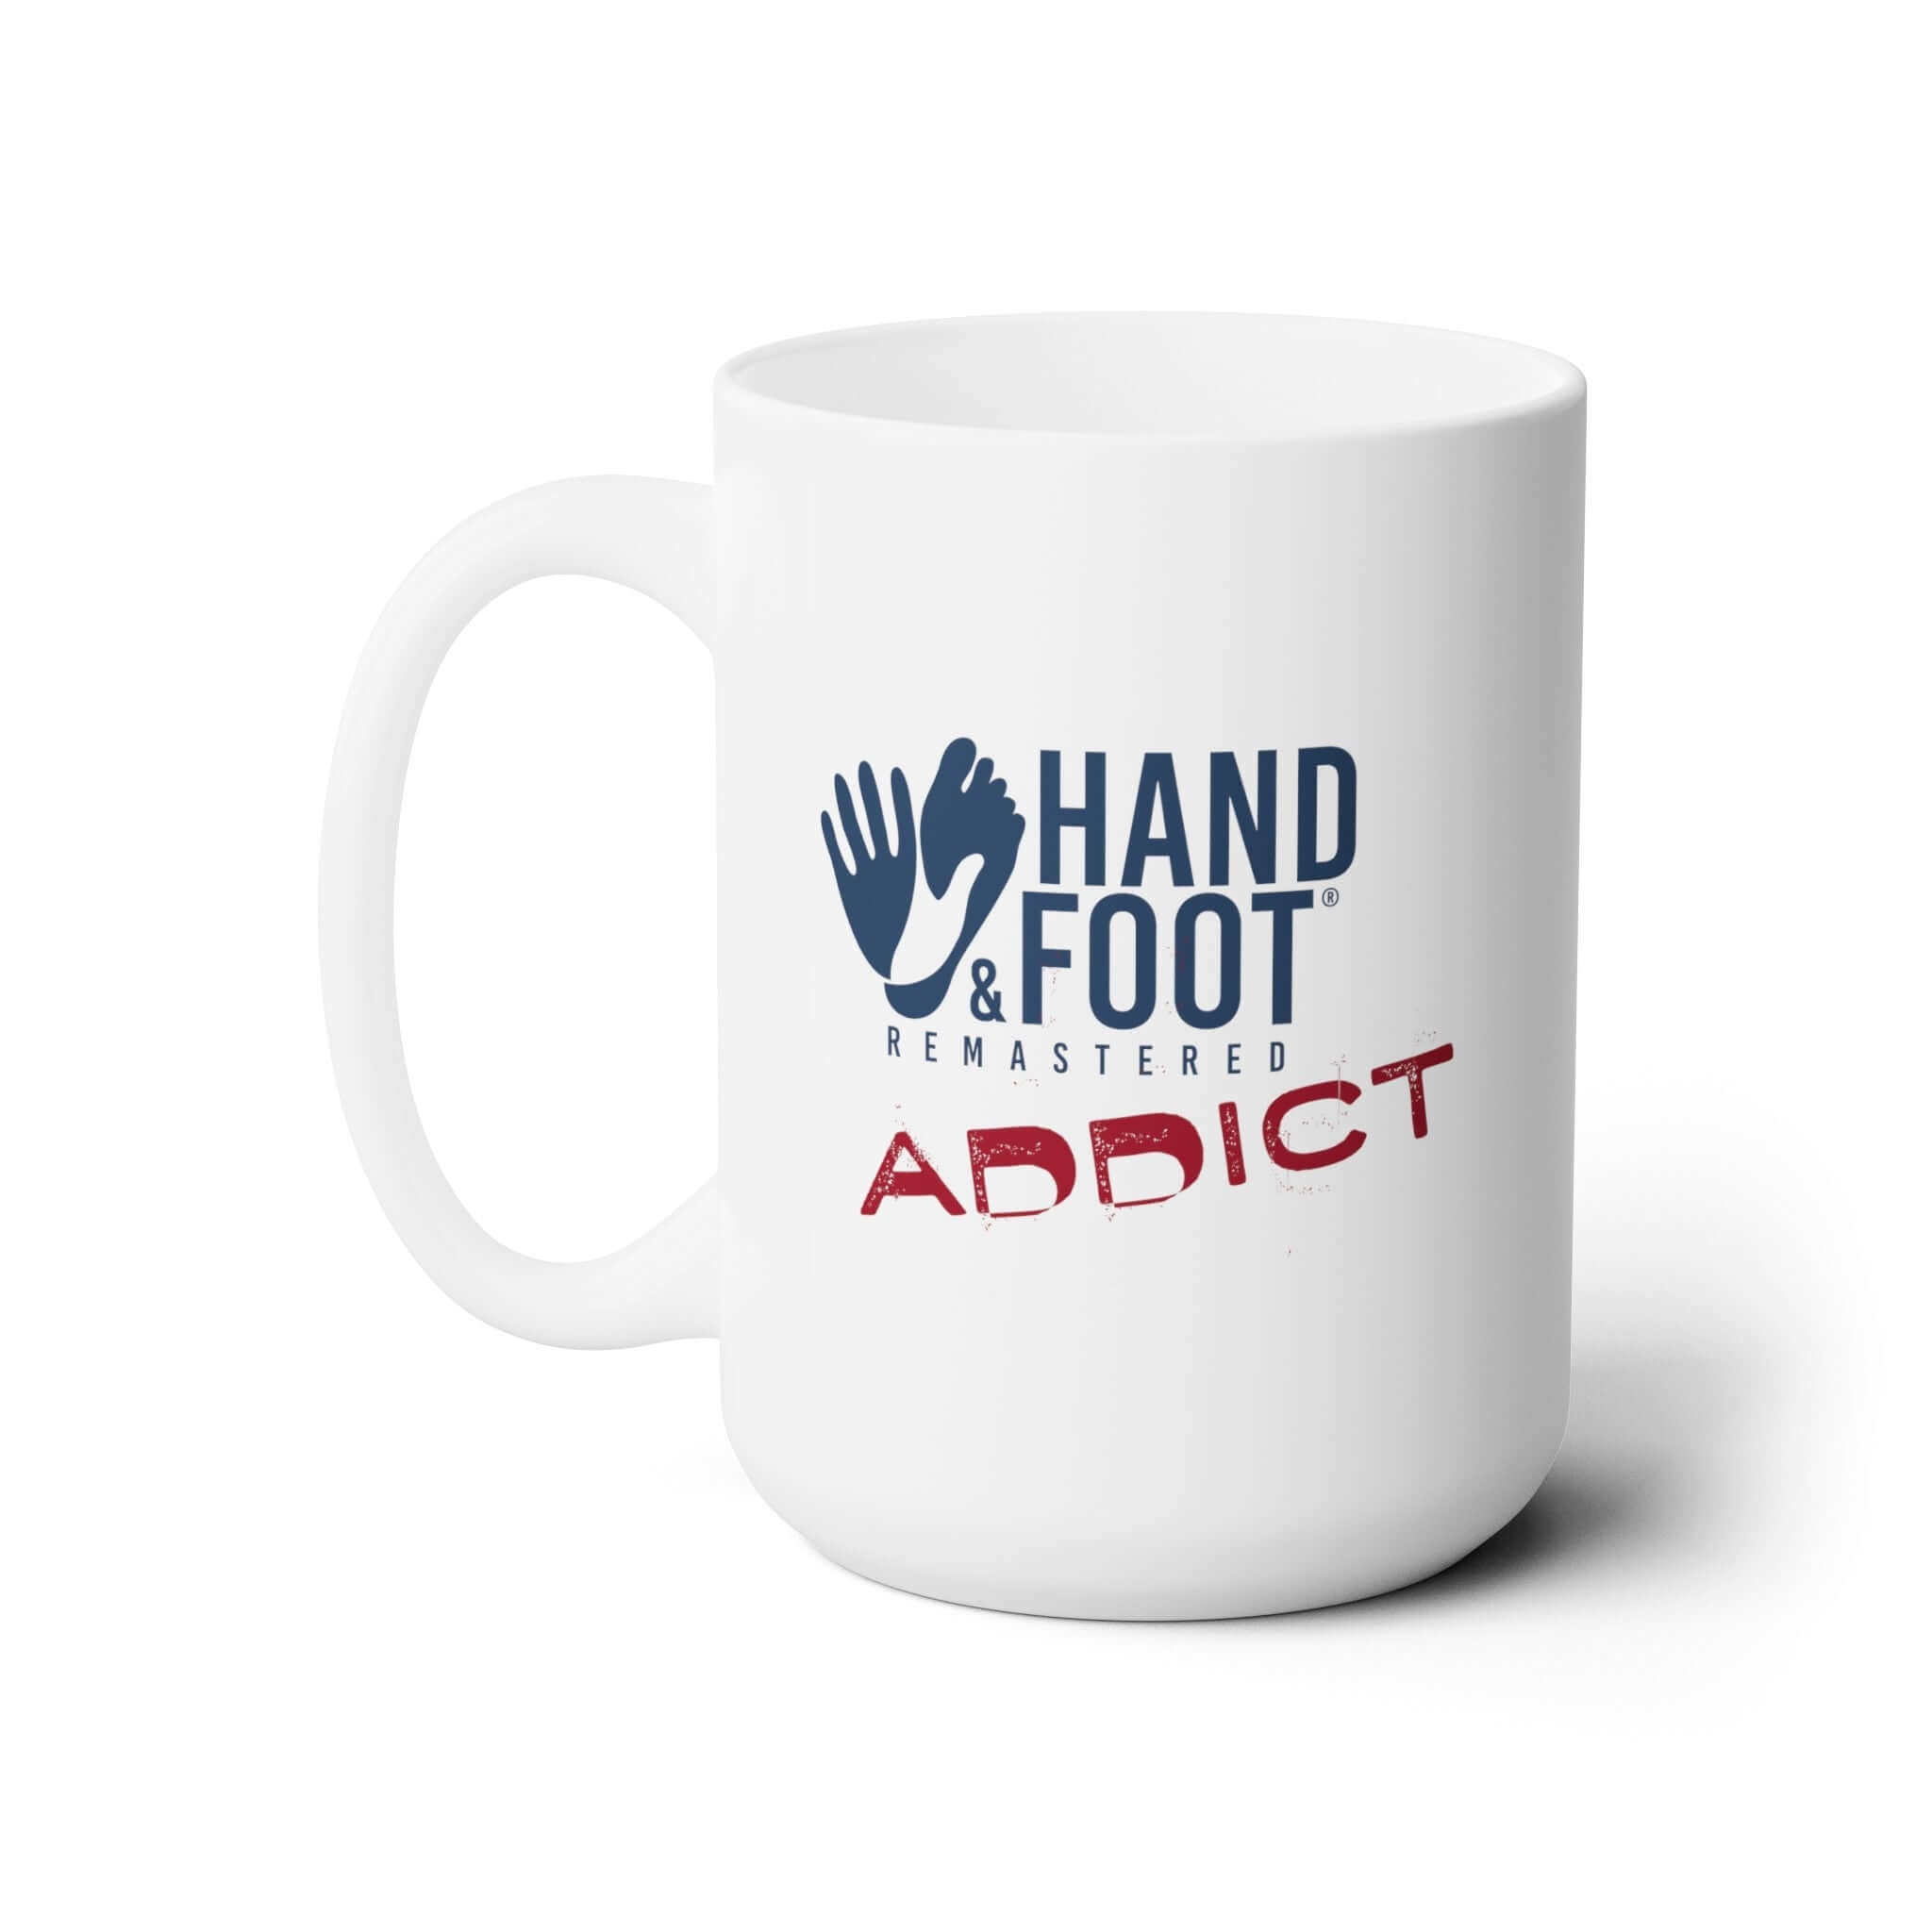 Hand & Foot Addict 15oz Ceramic Mug